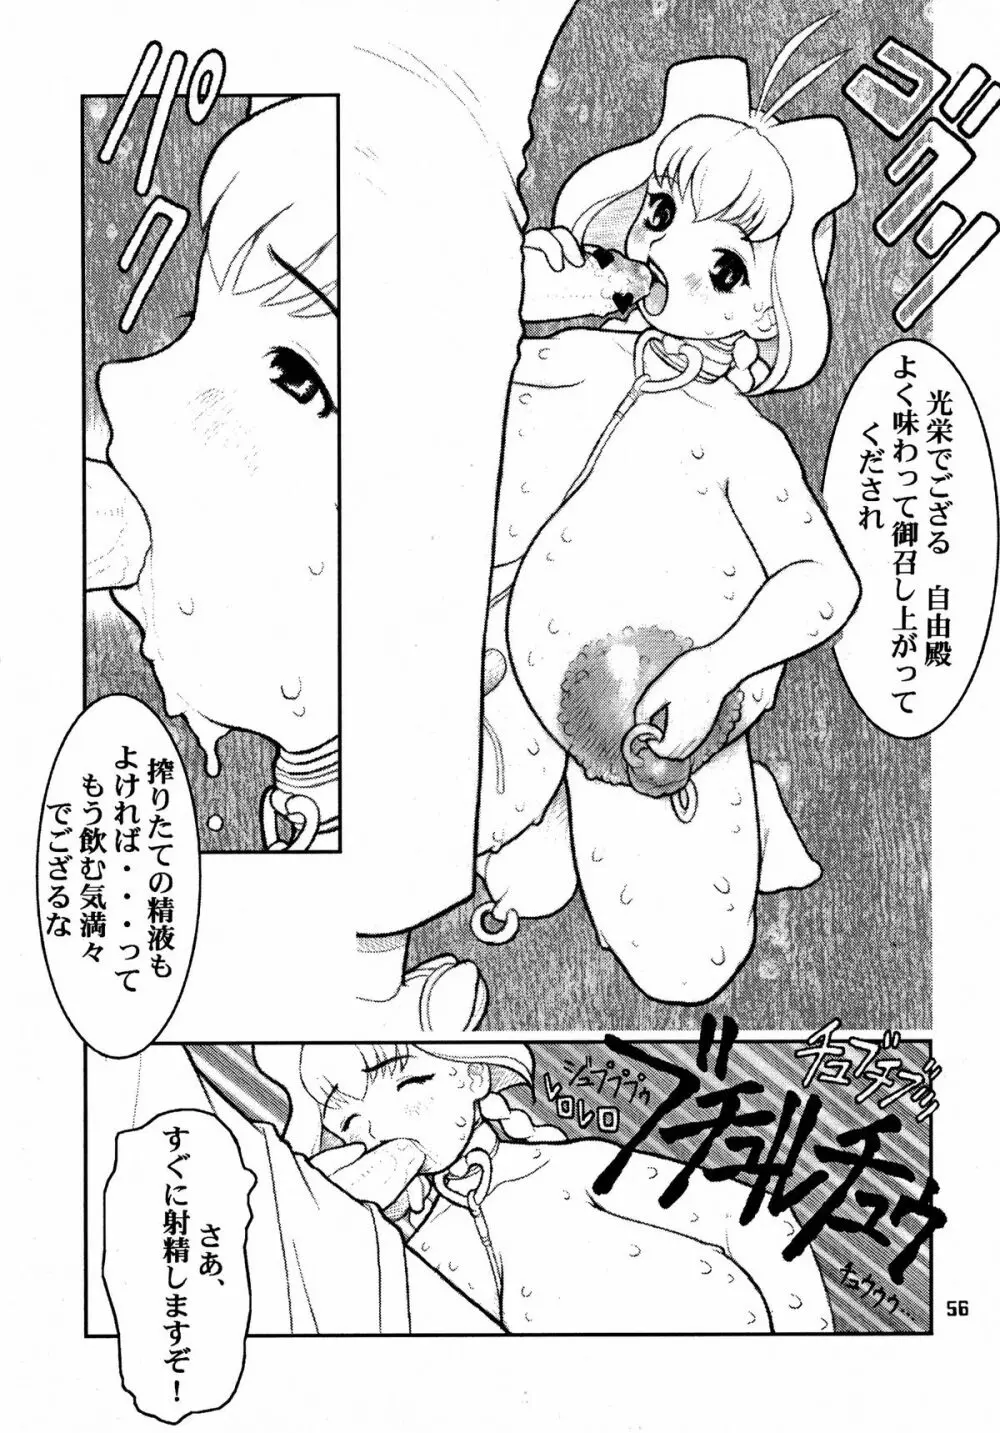 MaD ArtistS 十兵衛ちゃん - page56